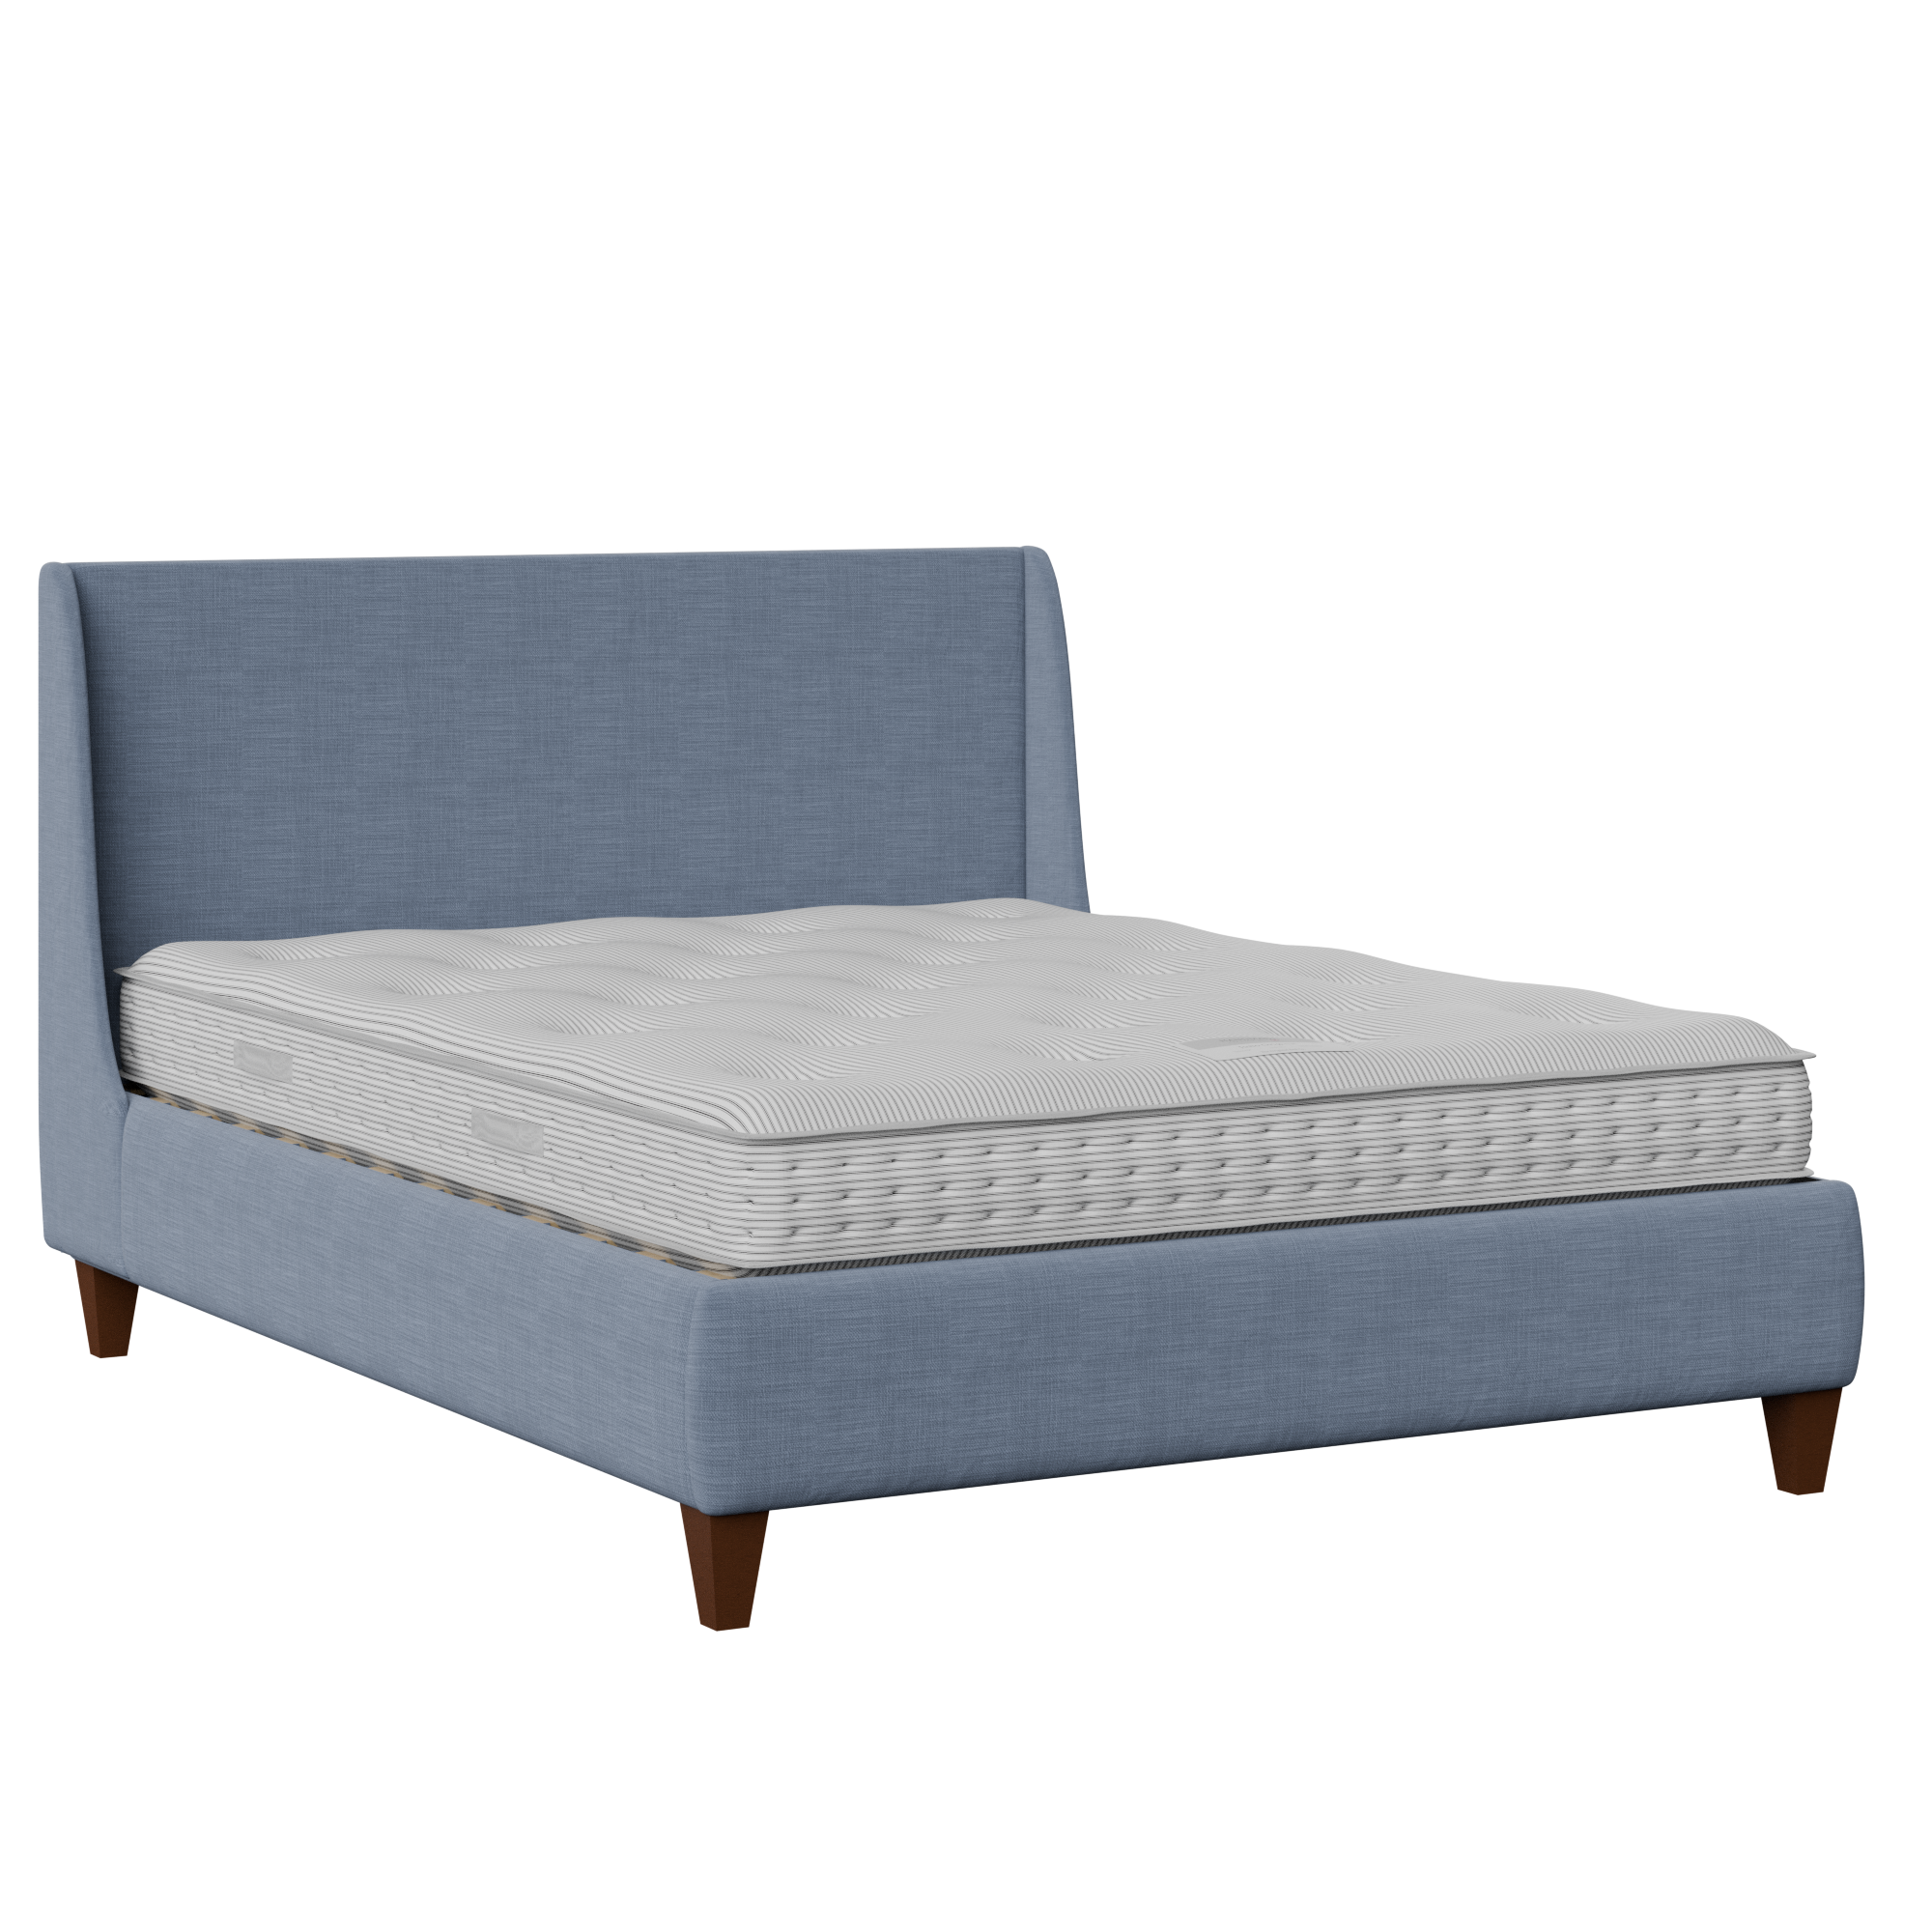 Sunderland upholstered bed in blue fabric